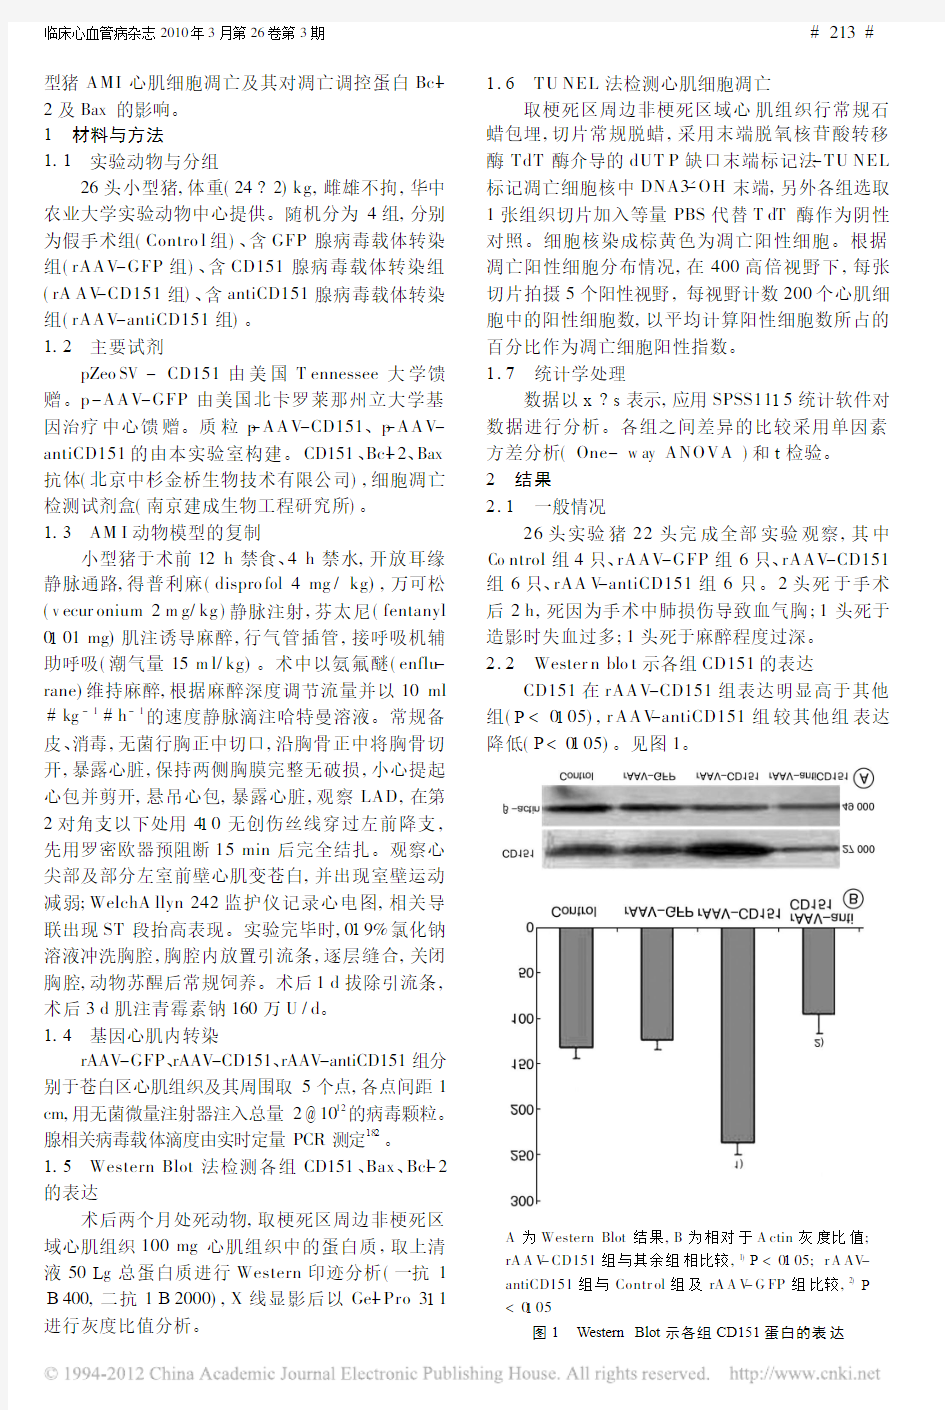 CD151对小型猪急性心肌梗死心肌细胞凋亡和Bax_Bcl_2蛋白的影响 (1)